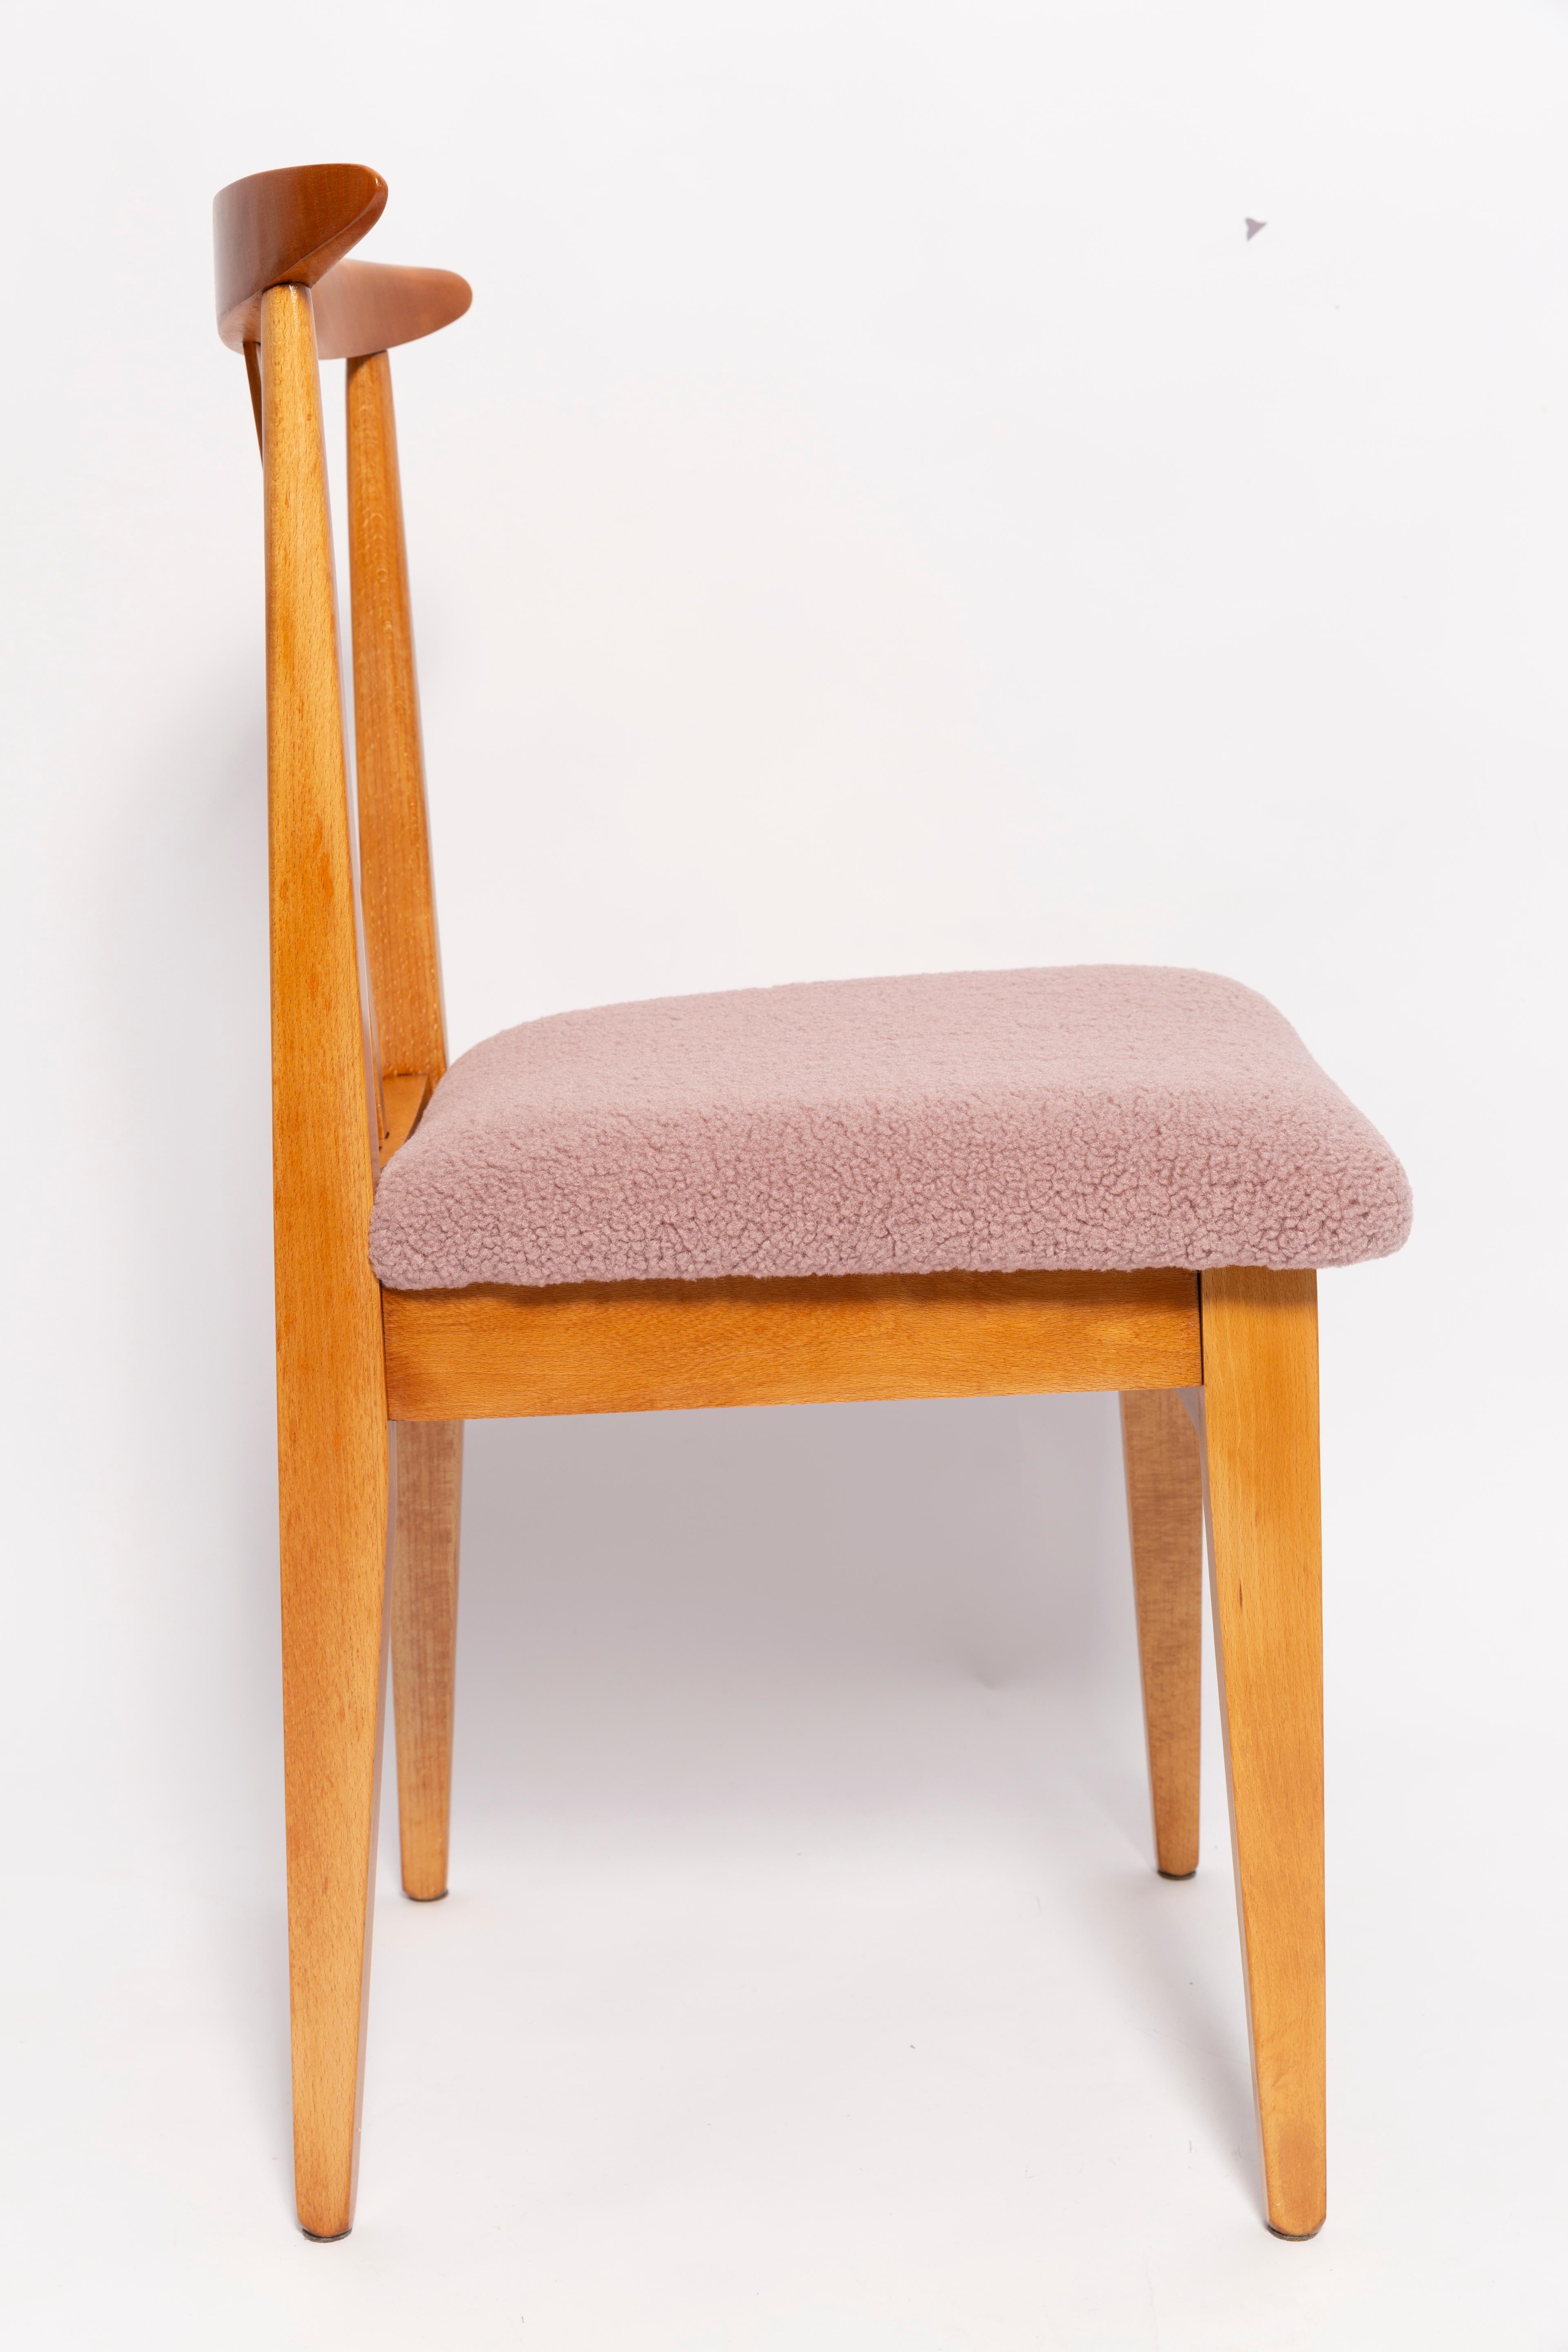 Polish Ten Mid-Century Pink Blush Boucle Chairs, Light Wood, M. Zielinski, Europe 1960s For Sale